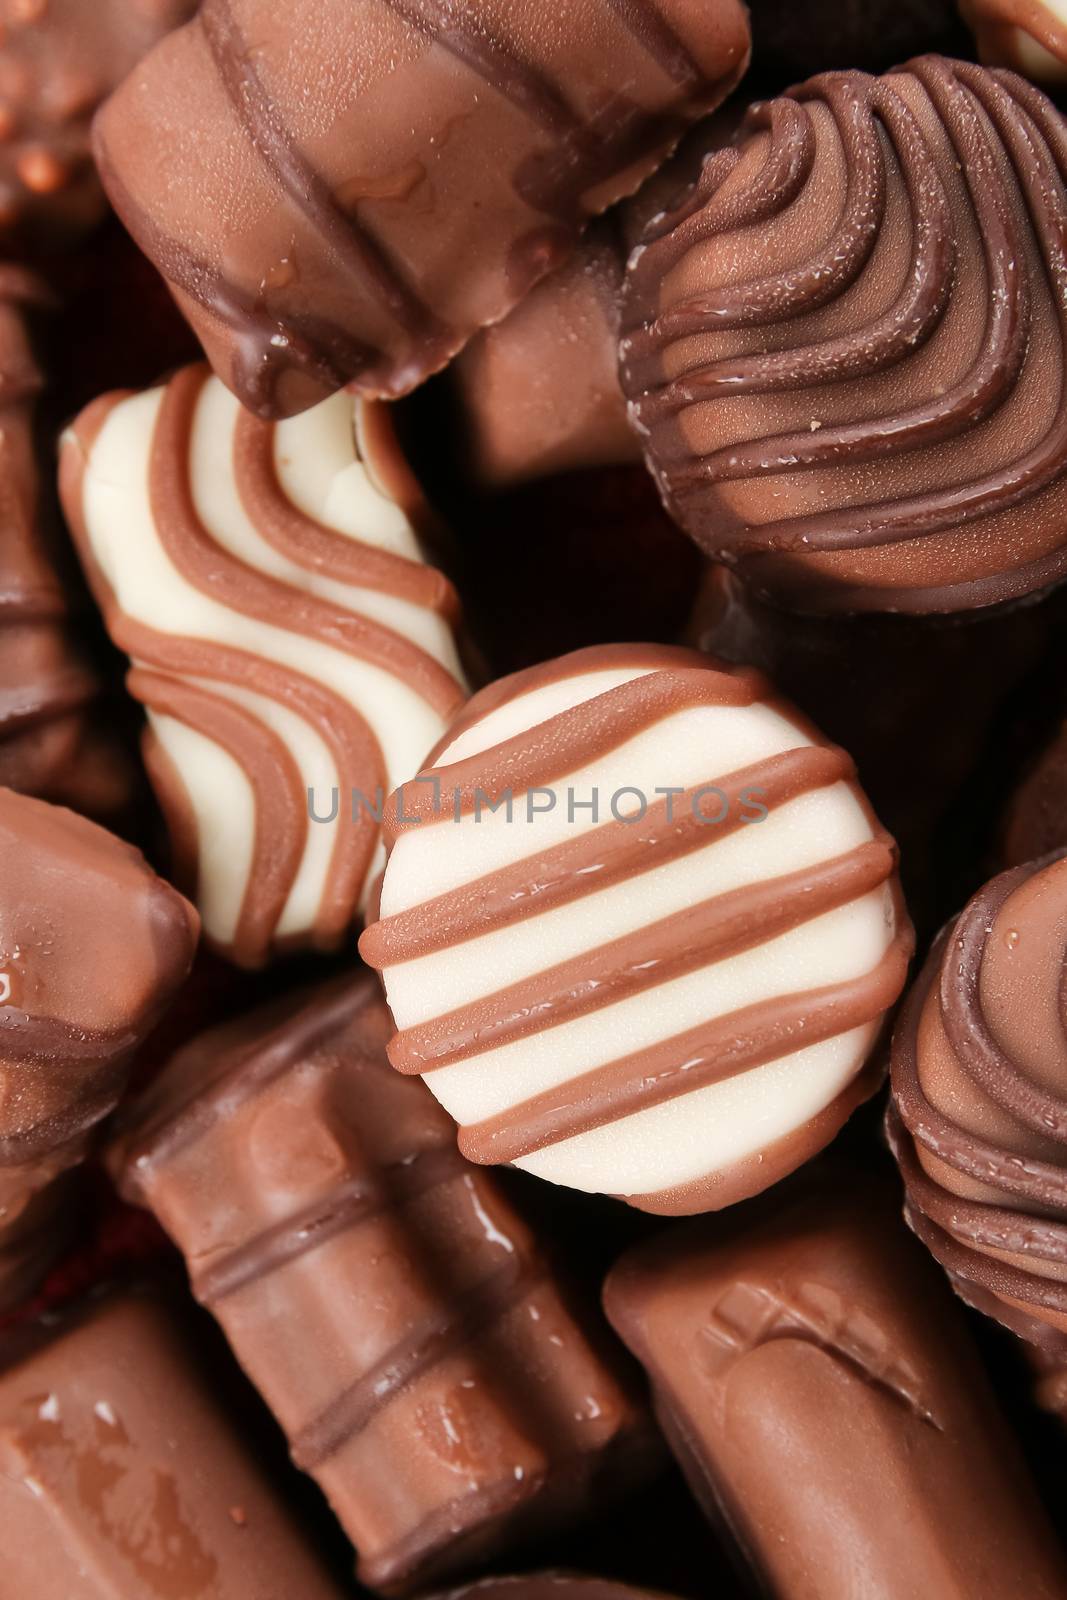 An assortment of fine chocolates in white, dark, and milk chocolate